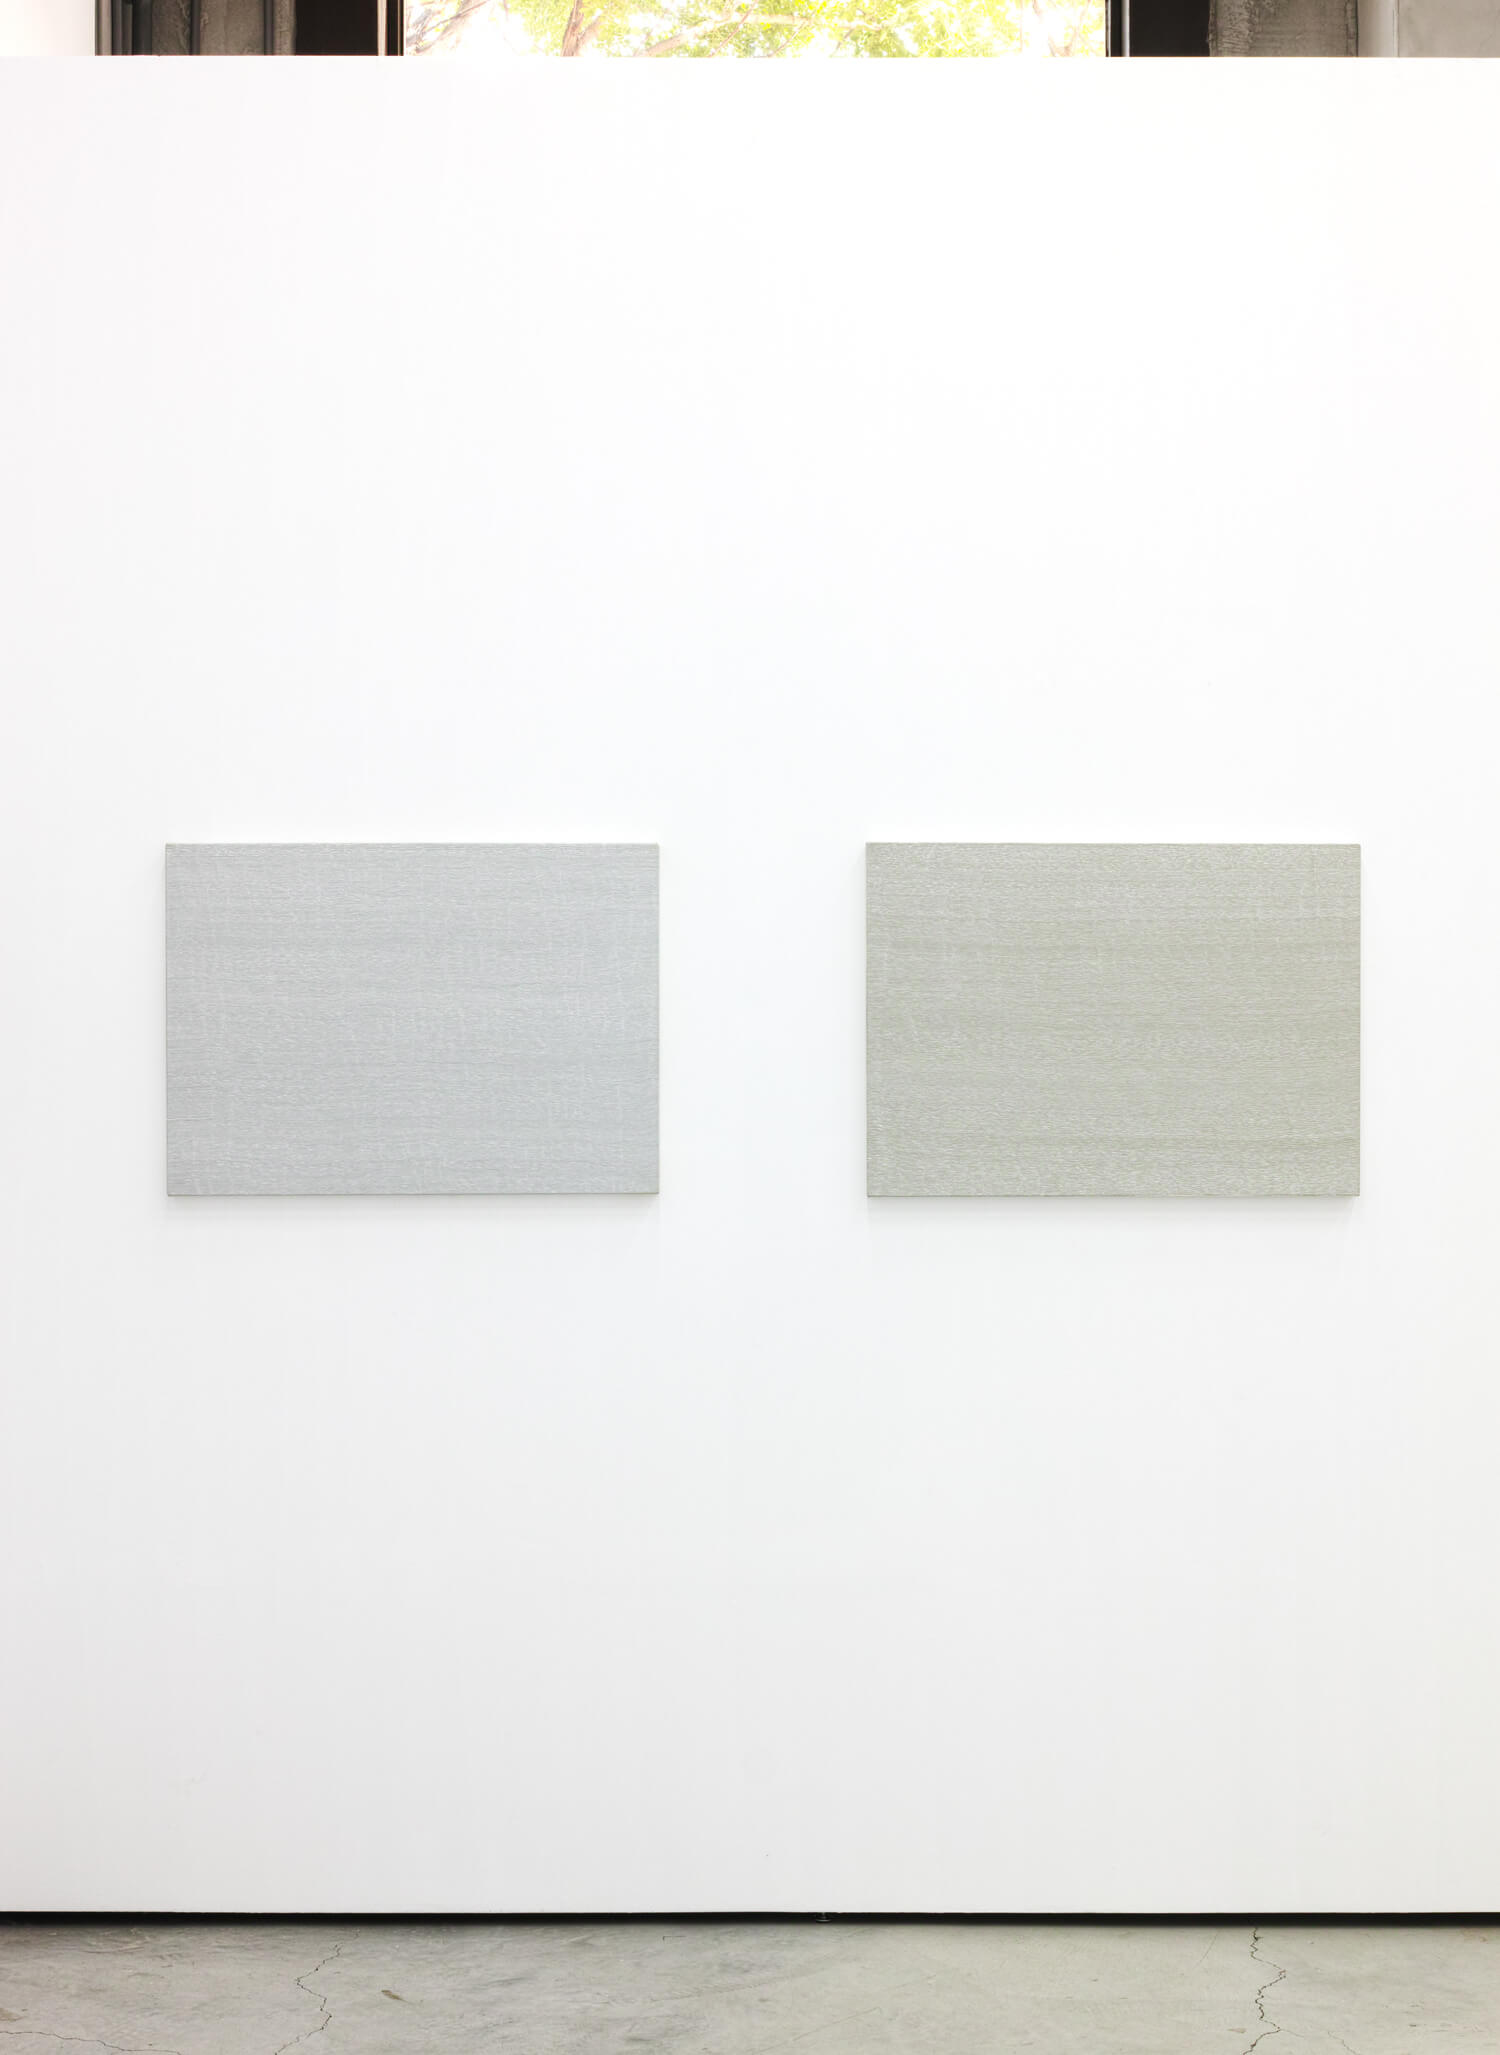 'Breath - warm gray'  (left) & 'Breath - cool gray' (right)<br>Oil on canvas , 56 x 78 cm, 1996 each